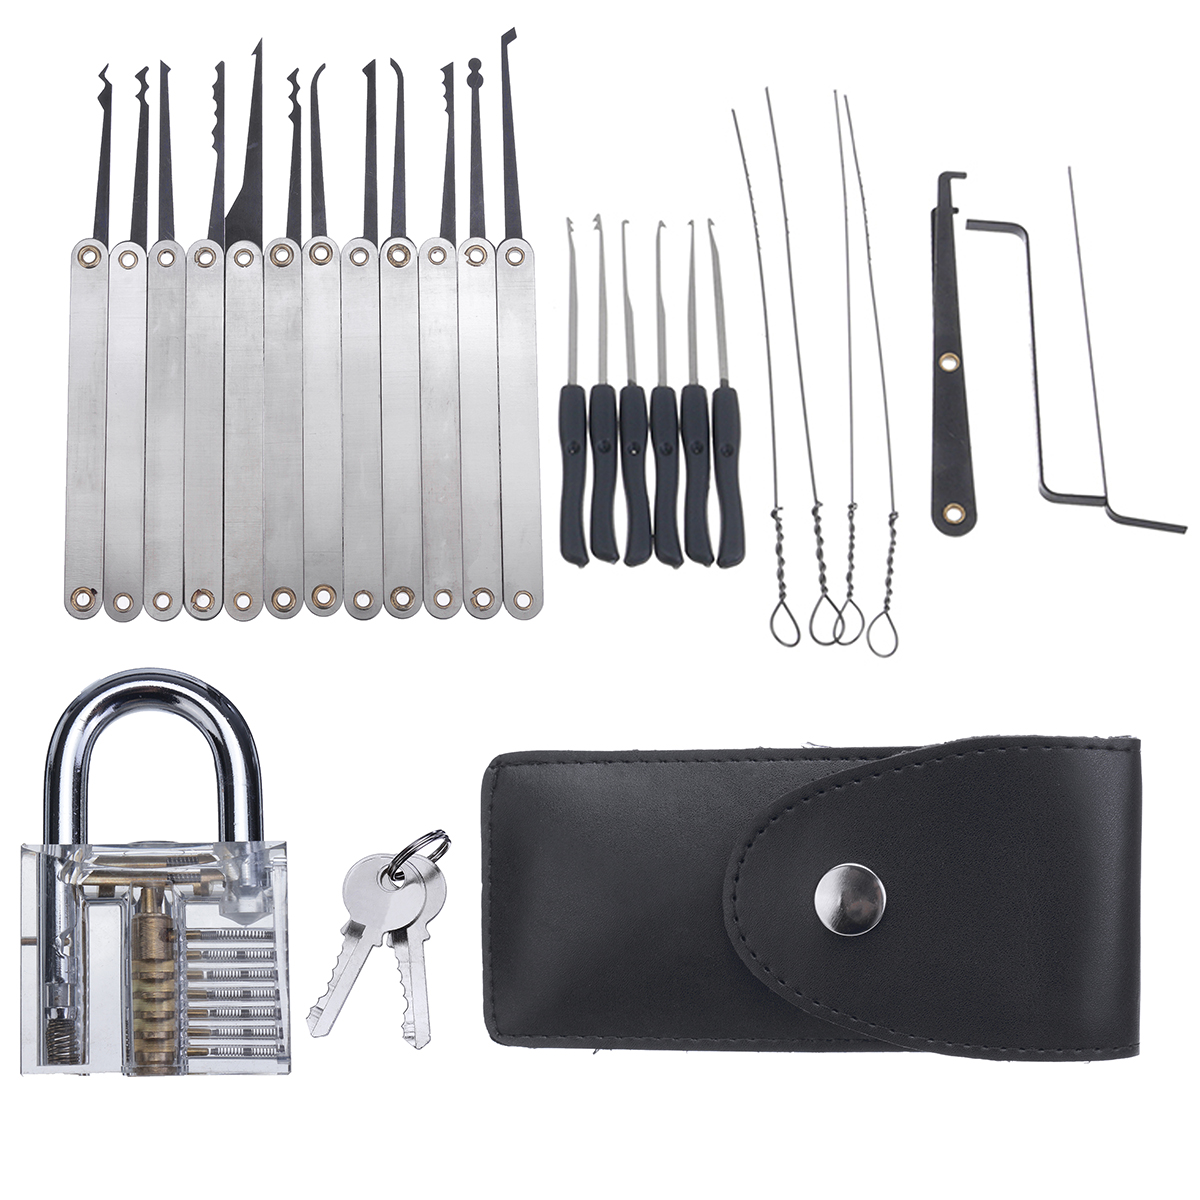 13 PCS Unlocking Lock Picking Tool Sets Locksmith Unlocking Training Tools